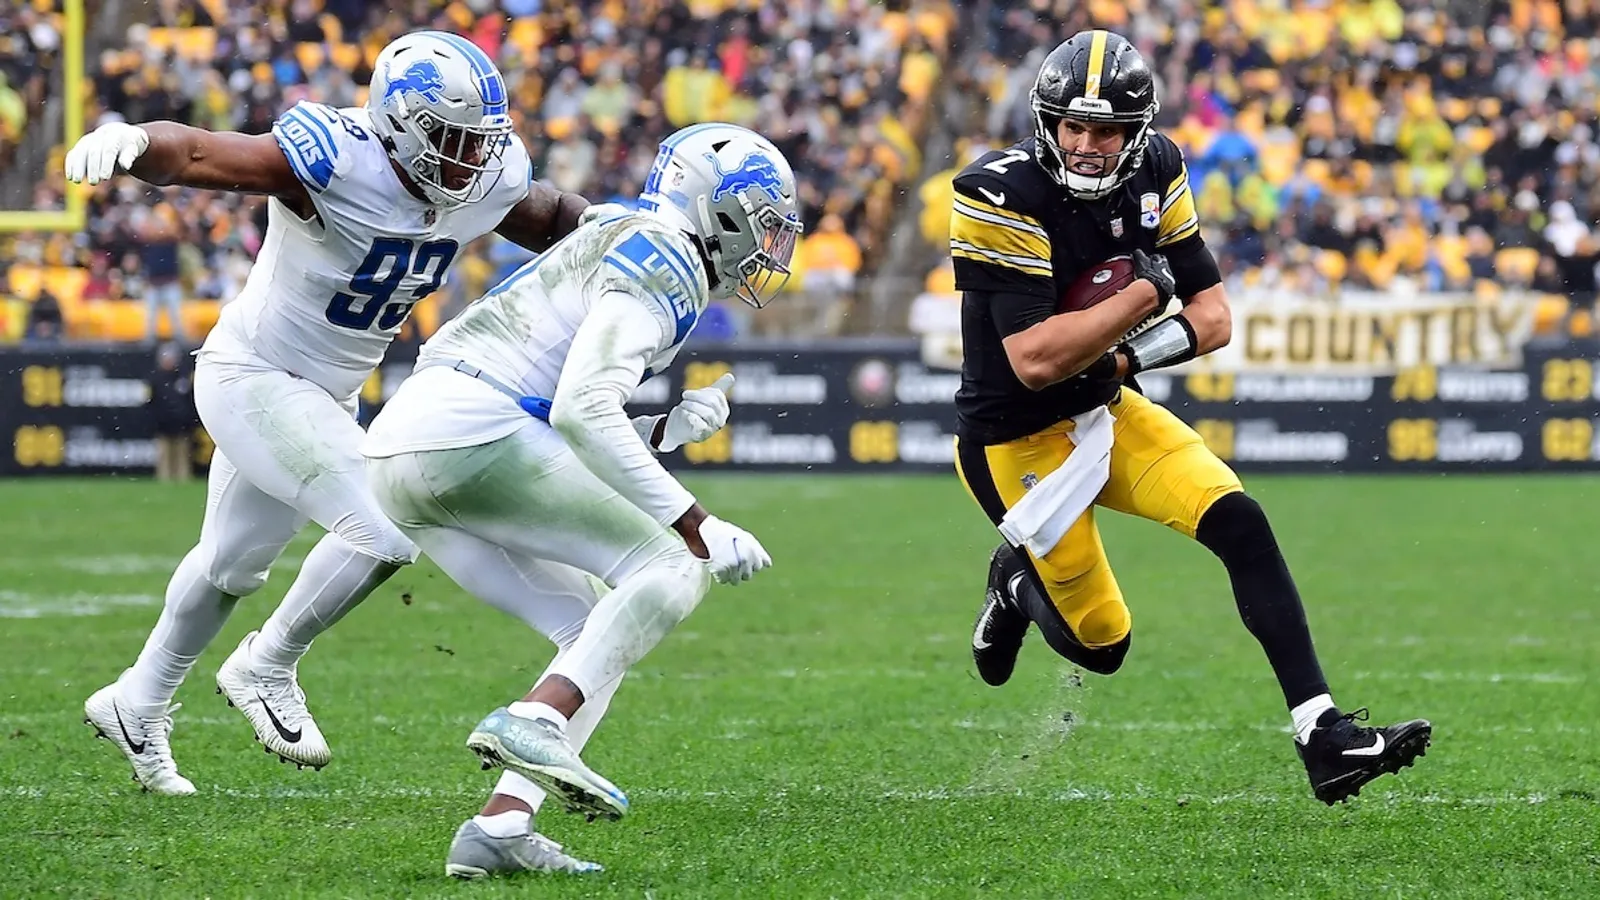 Mistake-prone Steelers tie Lions in spot start for Mason Rudolph